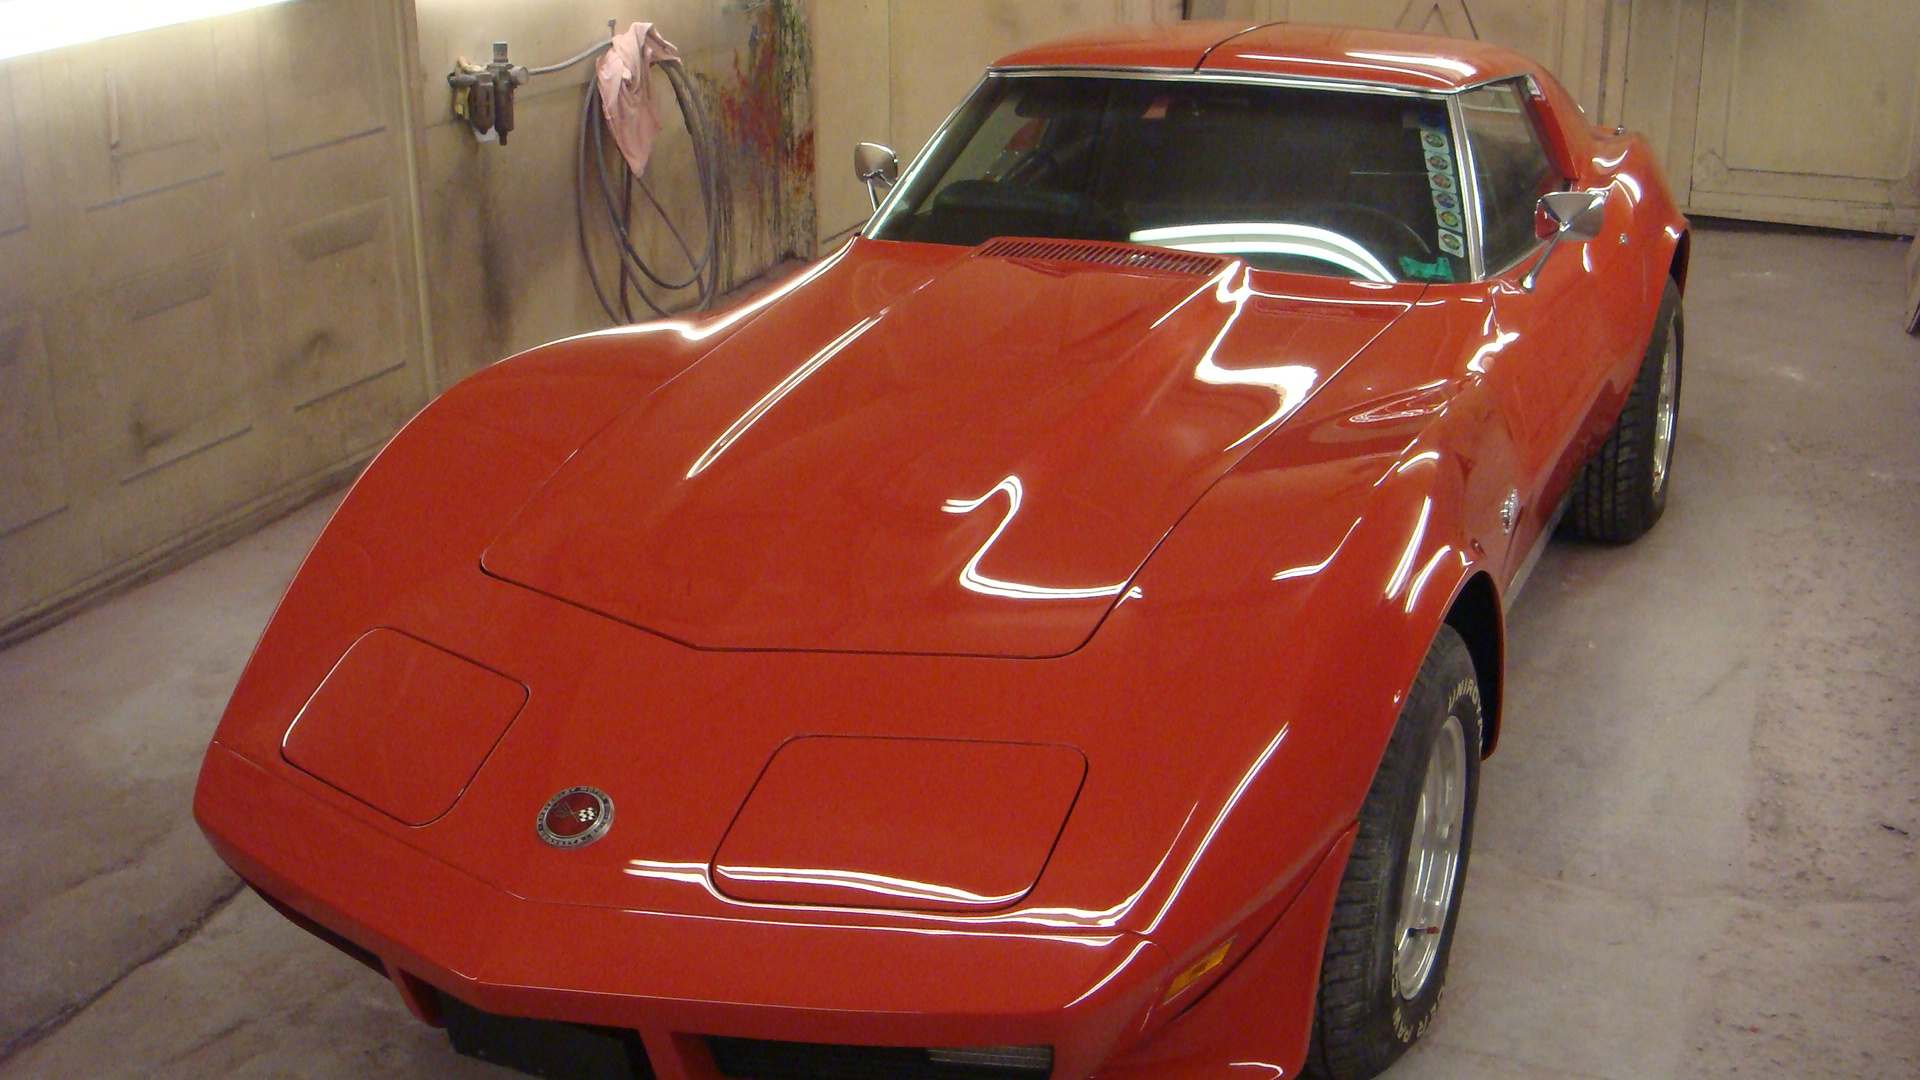 APR Bodyworks|Corvette|Corvette Stingray|Corvette restoration|1973Corvette|1973 Corvette Stingray